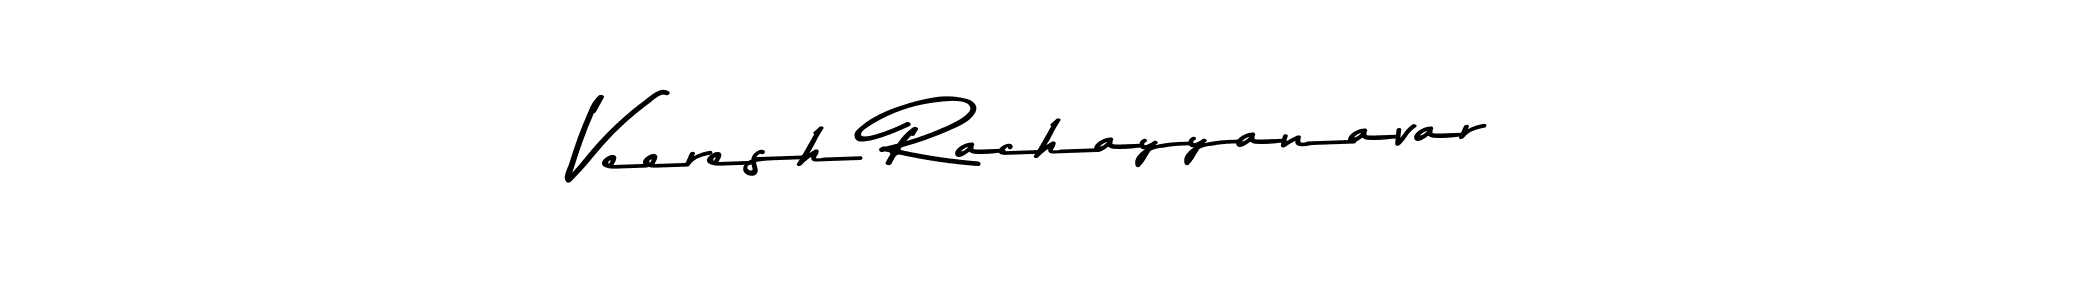 Veeresh Rachayyanavar stylish signature style. Best Handwritten Sign (Asem Kandis PERSONAL USE) for my name. Handwritten Signature Collection Ideas for my name Veeresh Rachayyanavar. Veeresh Rachayyanavar signature style 9 images and pictures png